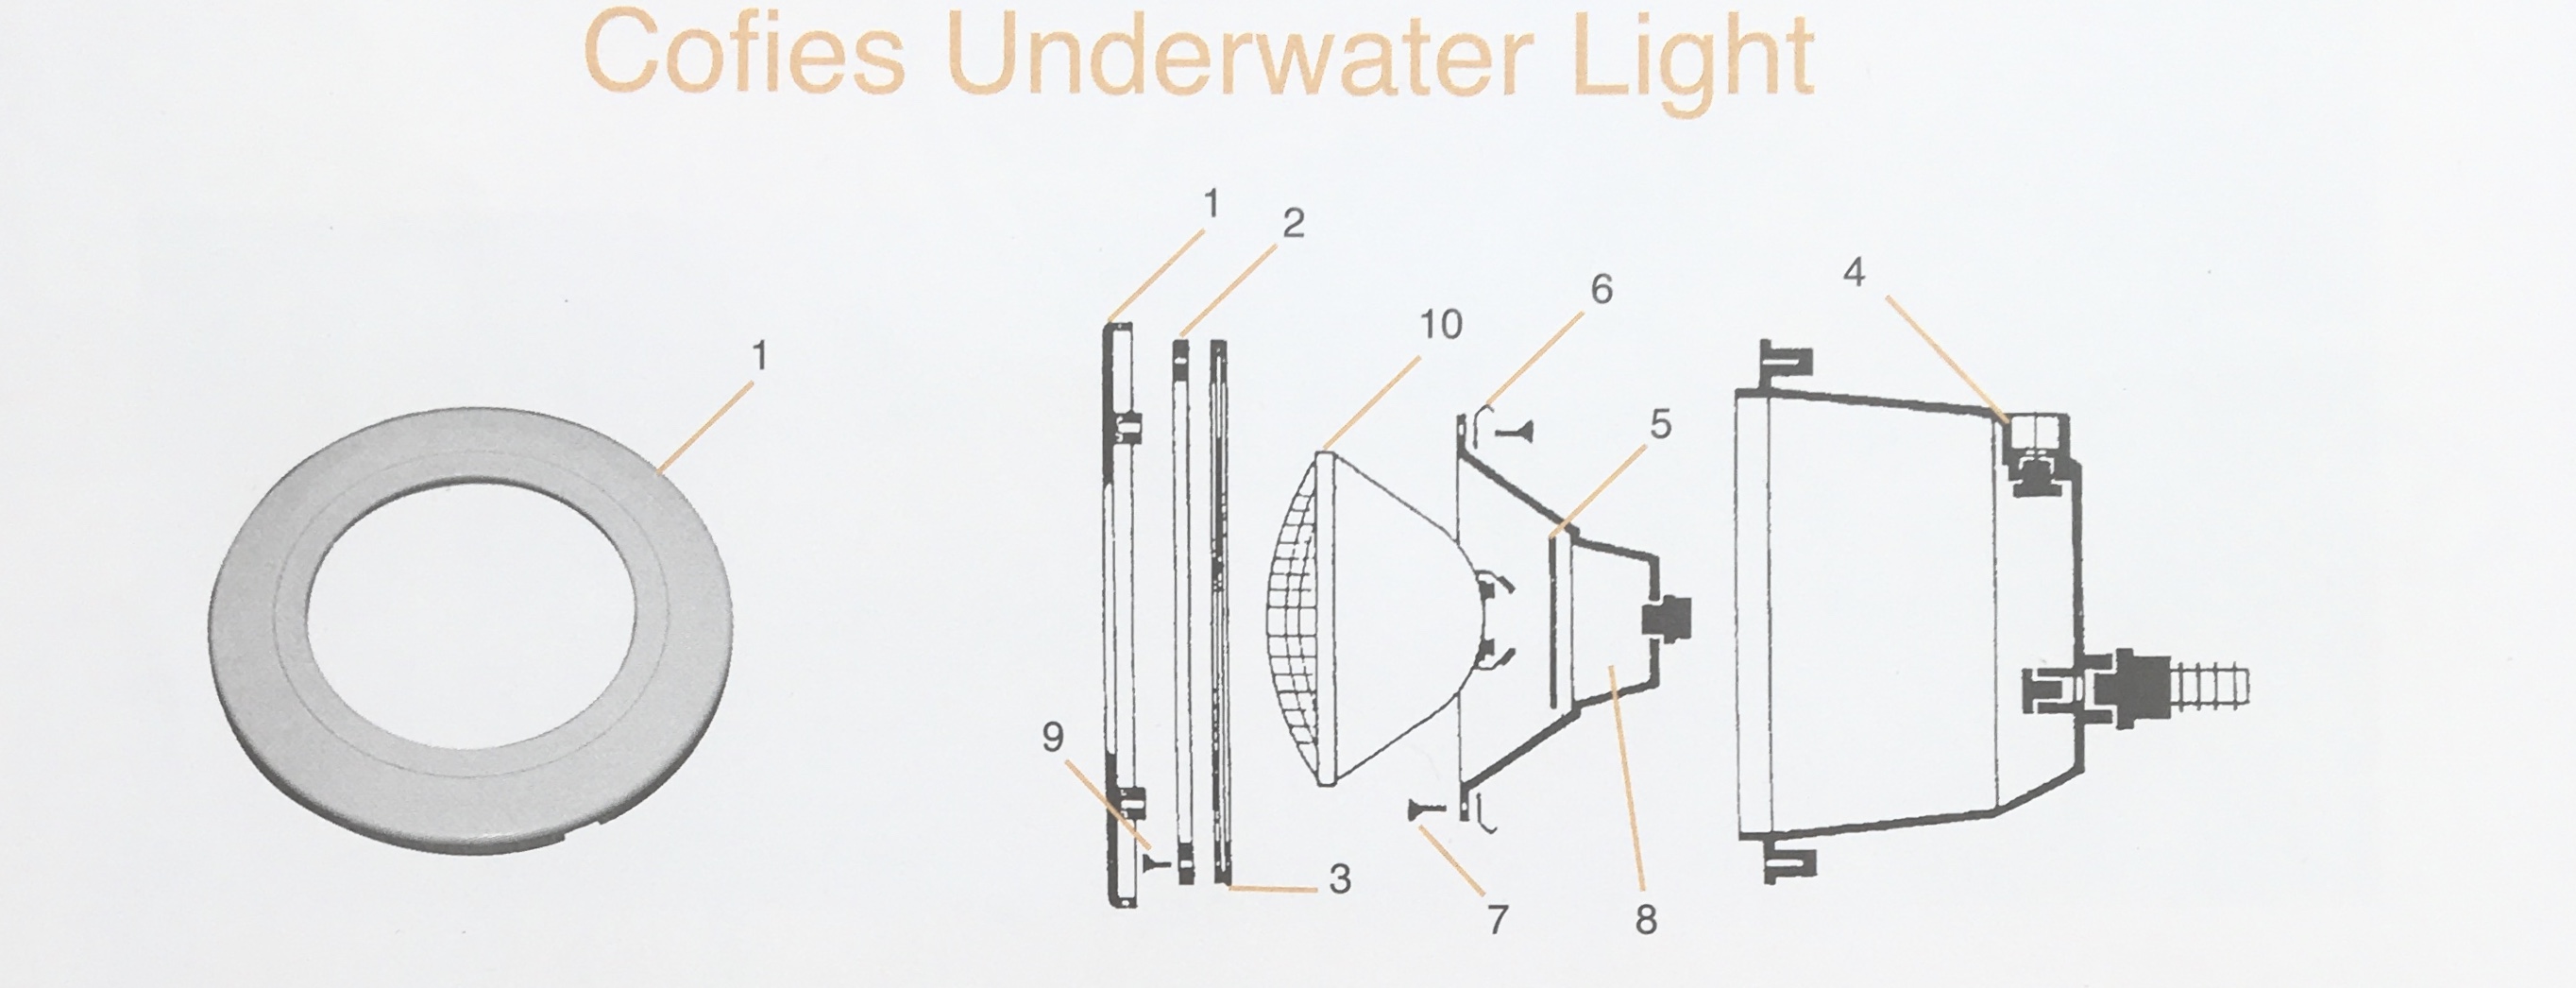 Cofies Underwater LightParts